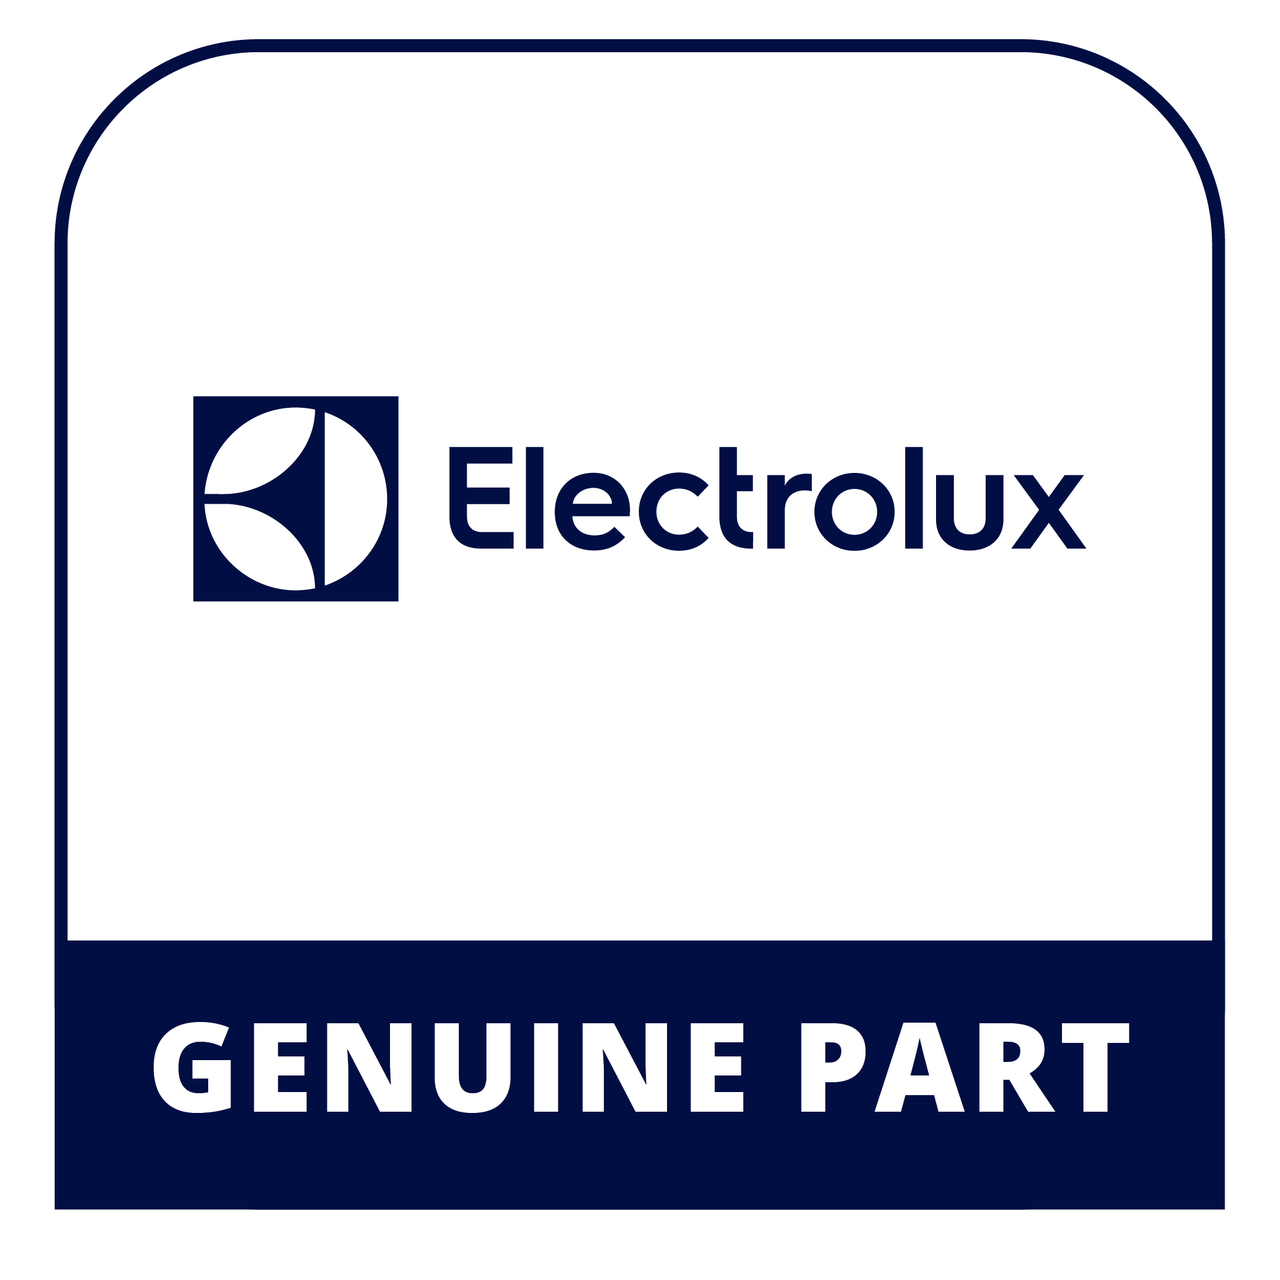 Frigidaire - Electrolux 5304499346 Bracket - Genuine Electrolux Part